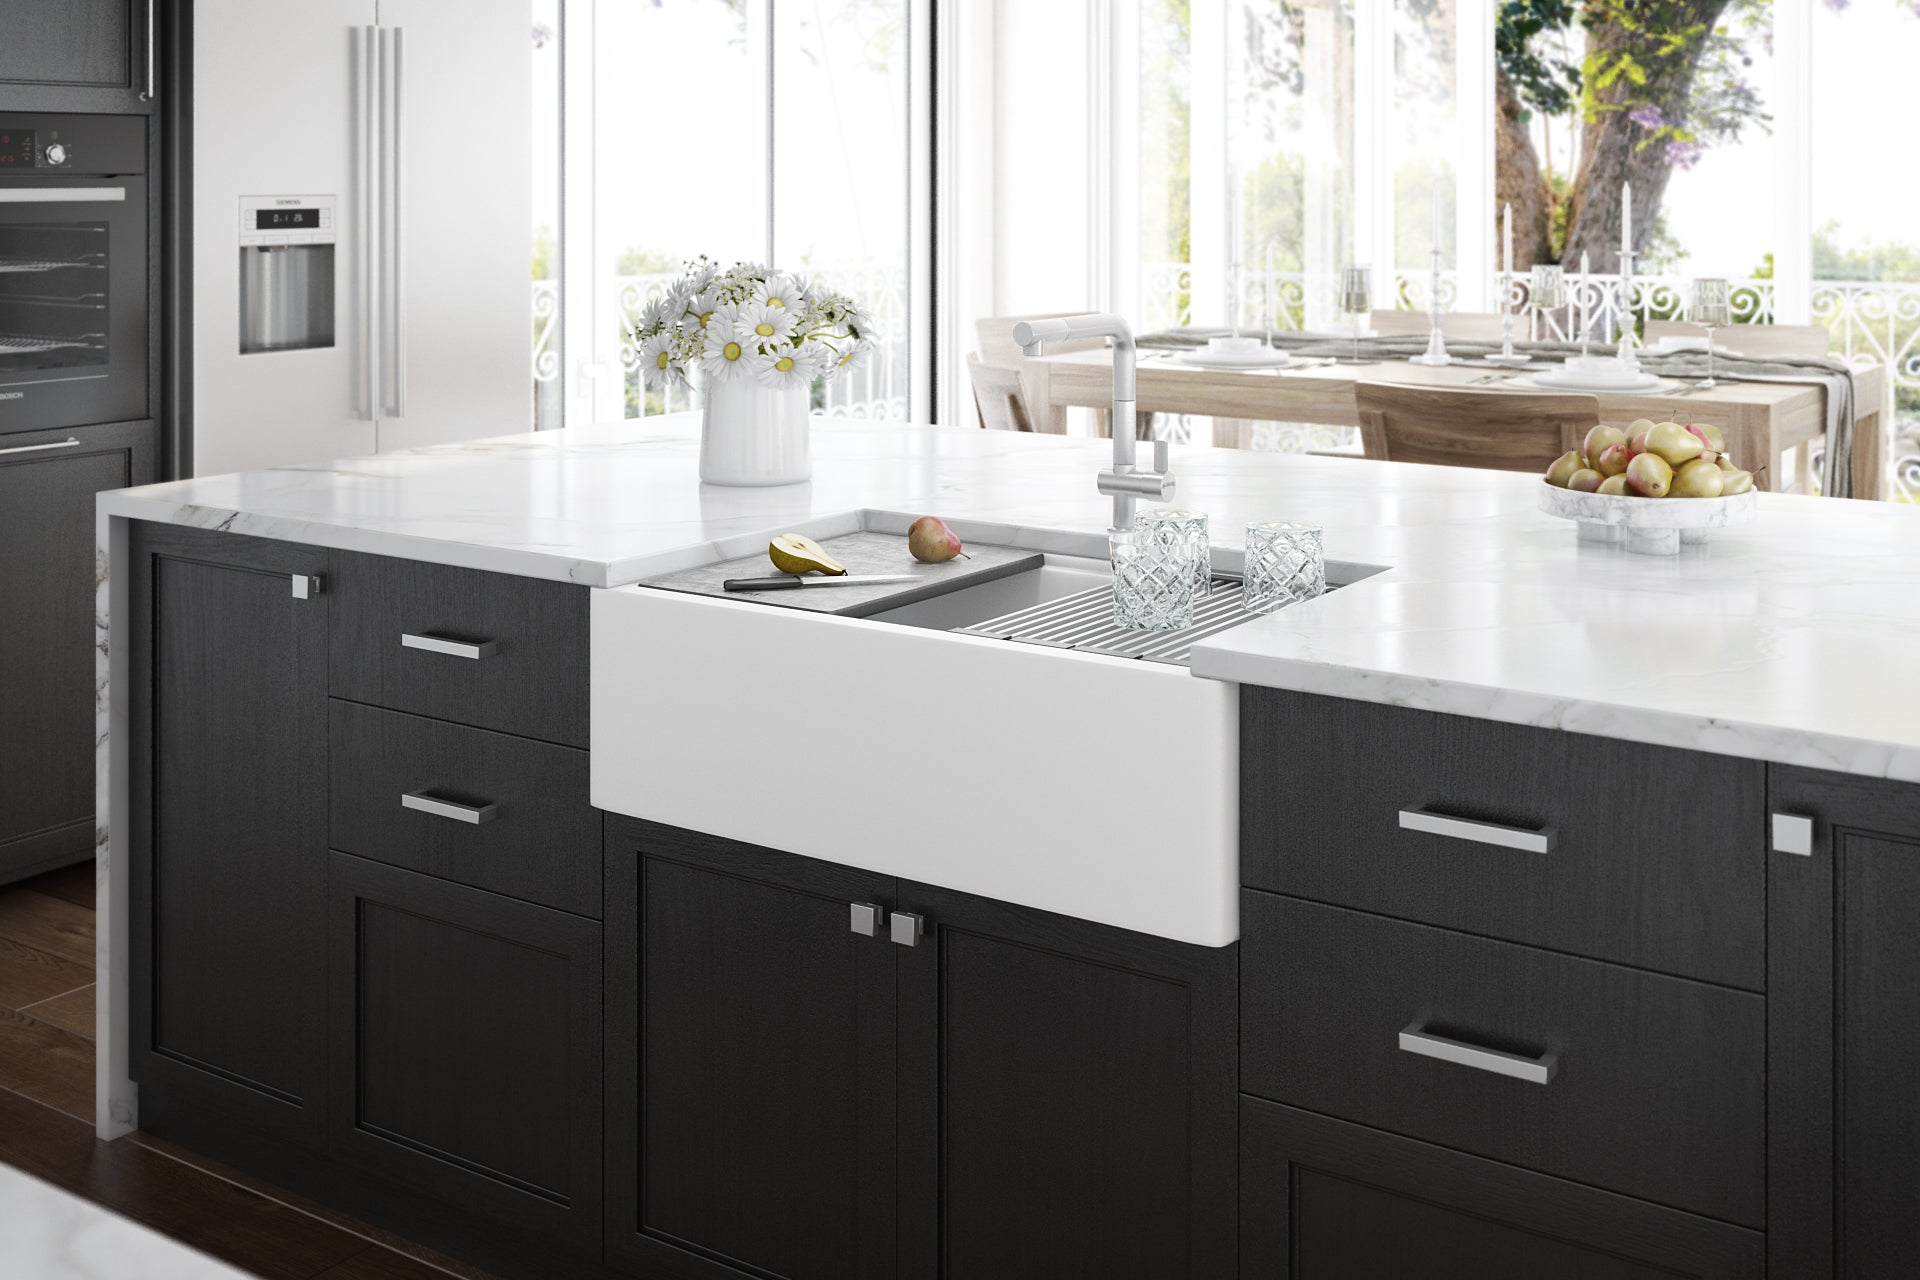 Ruvati 33" Granite Composite Farmhouse Workstation Apron Front Kitchen Sink